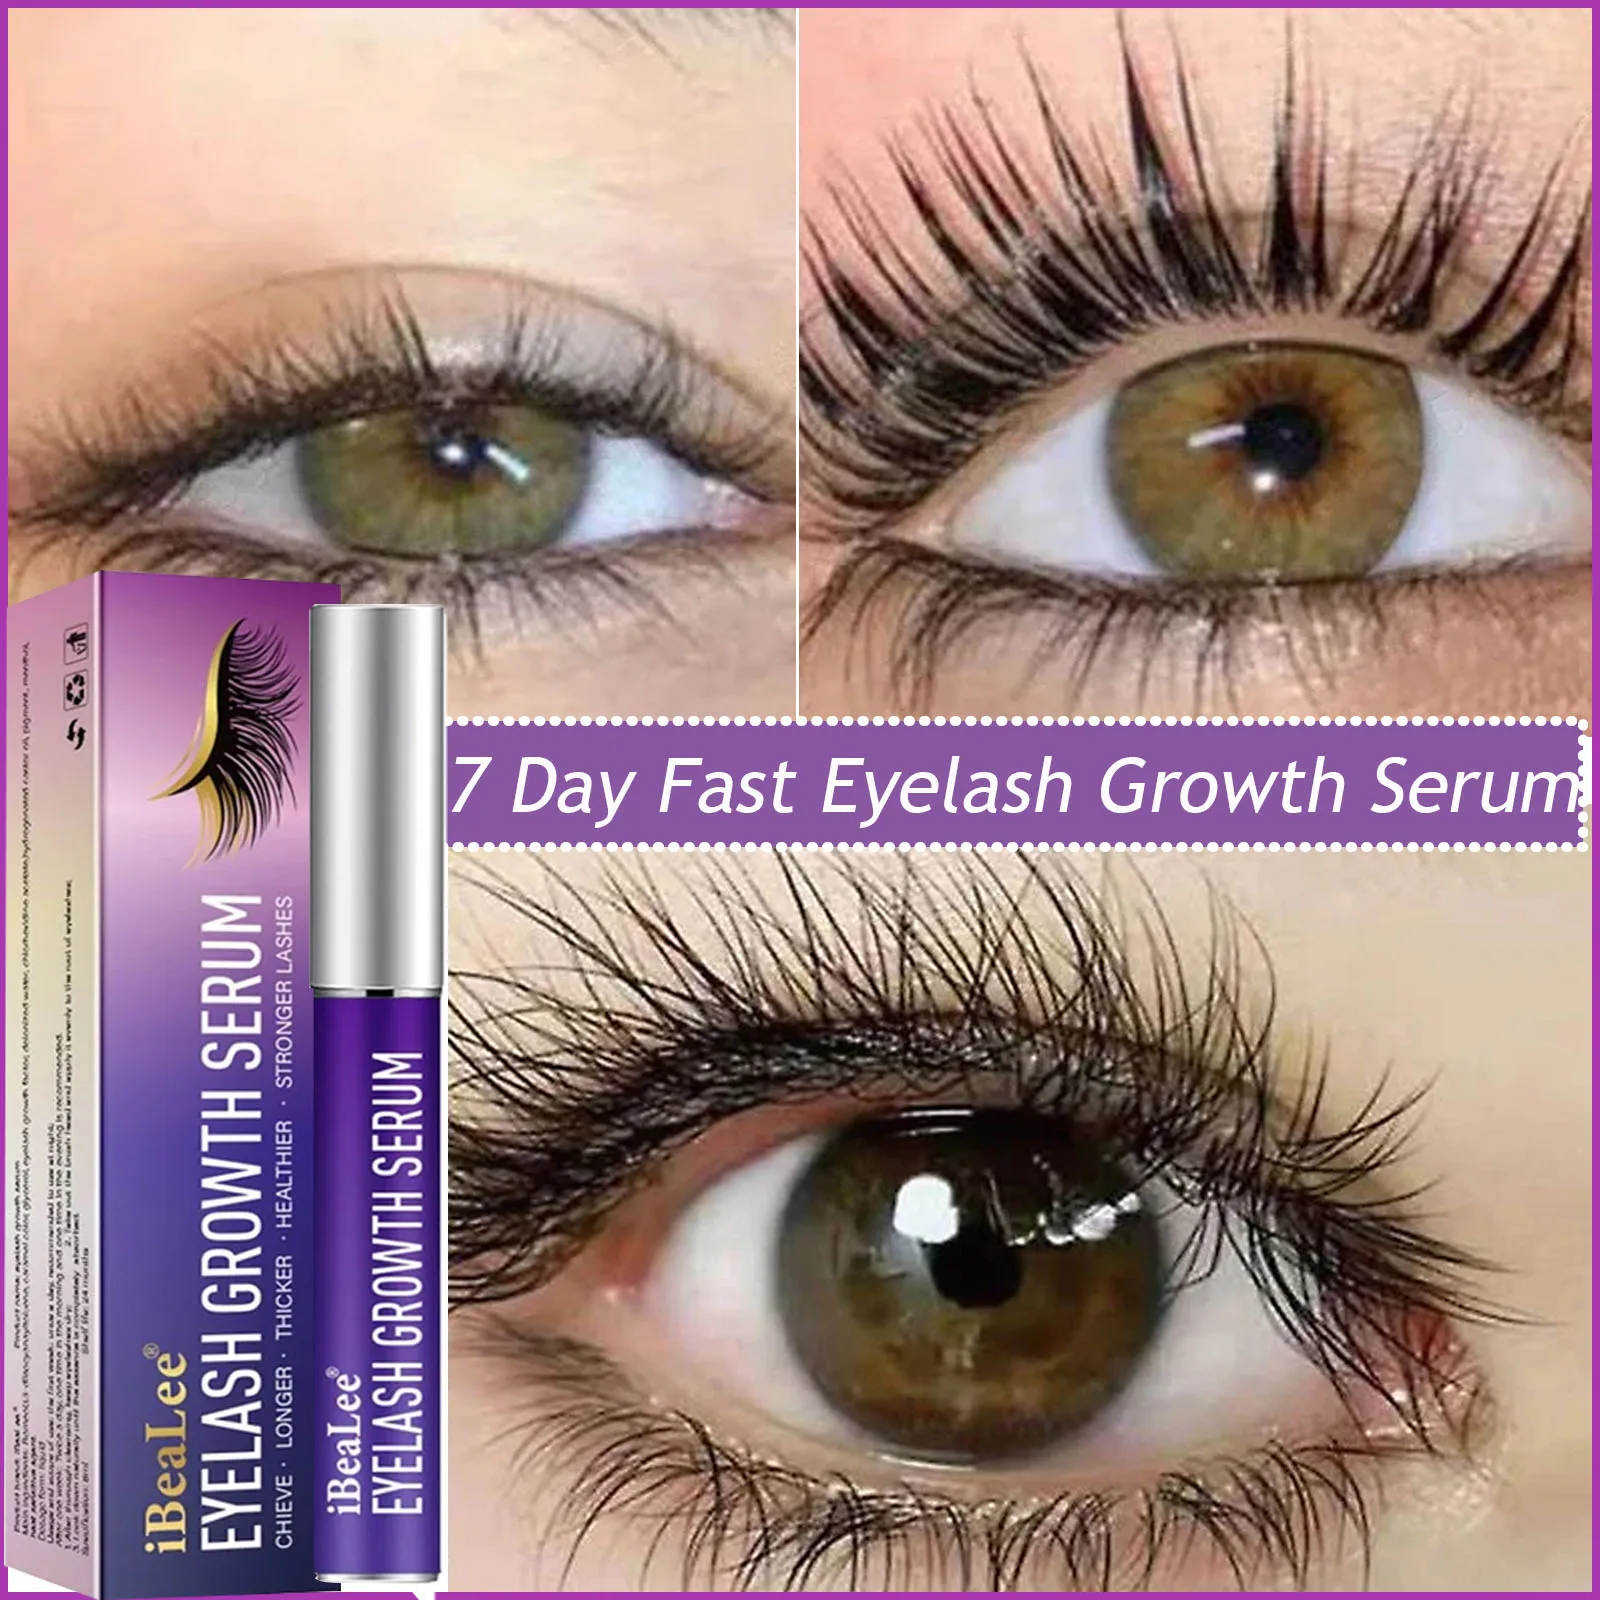 

7 Days Fast Eyelash Growth Serum Natural Lash Lifting Eyebrows Enhancer Thicker Fuller Longer Treatment Eye Beauty Care Makeup